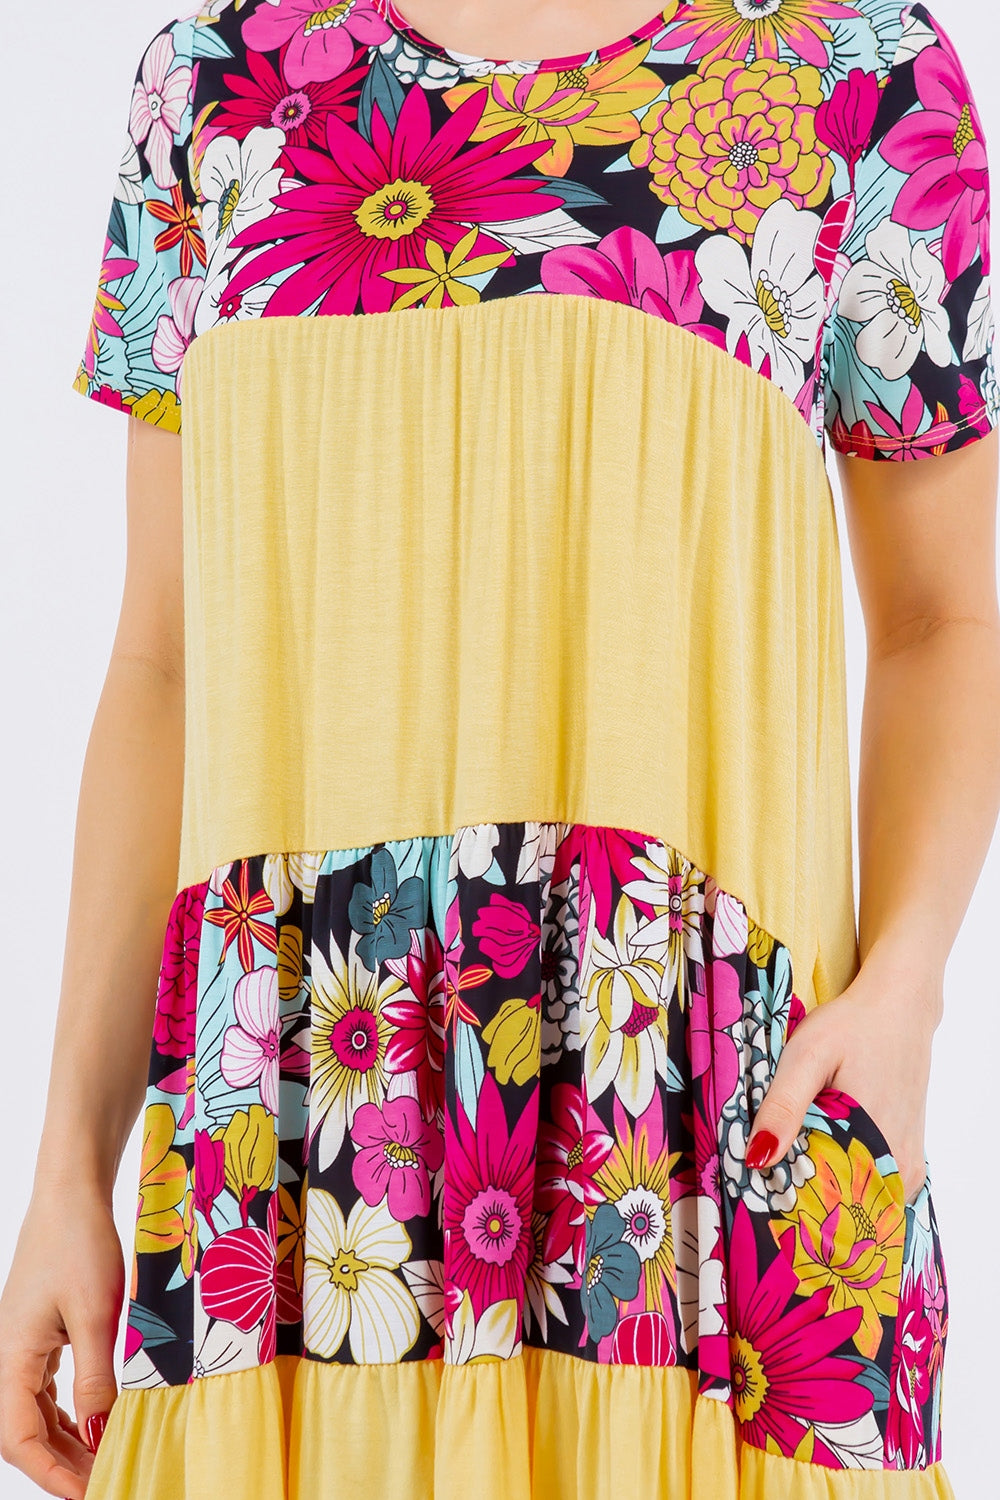 Celeste Full Size Color Block Floral Round Neck Short Sleeve Dress - Tigbul's Variety Fashion Shop